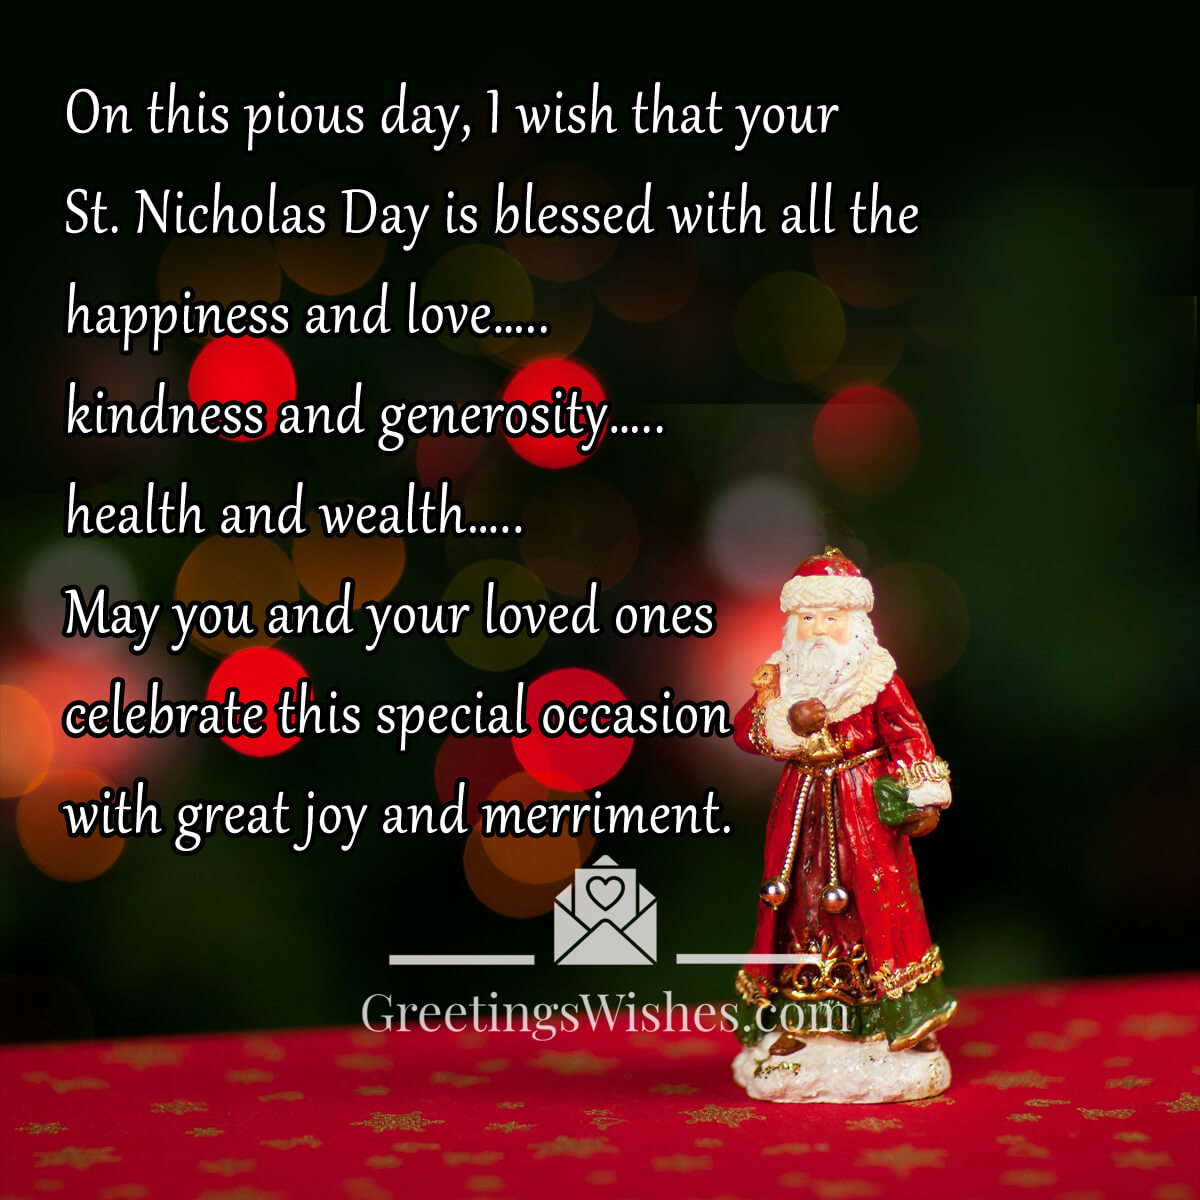 Saint Nicholas Pious Day